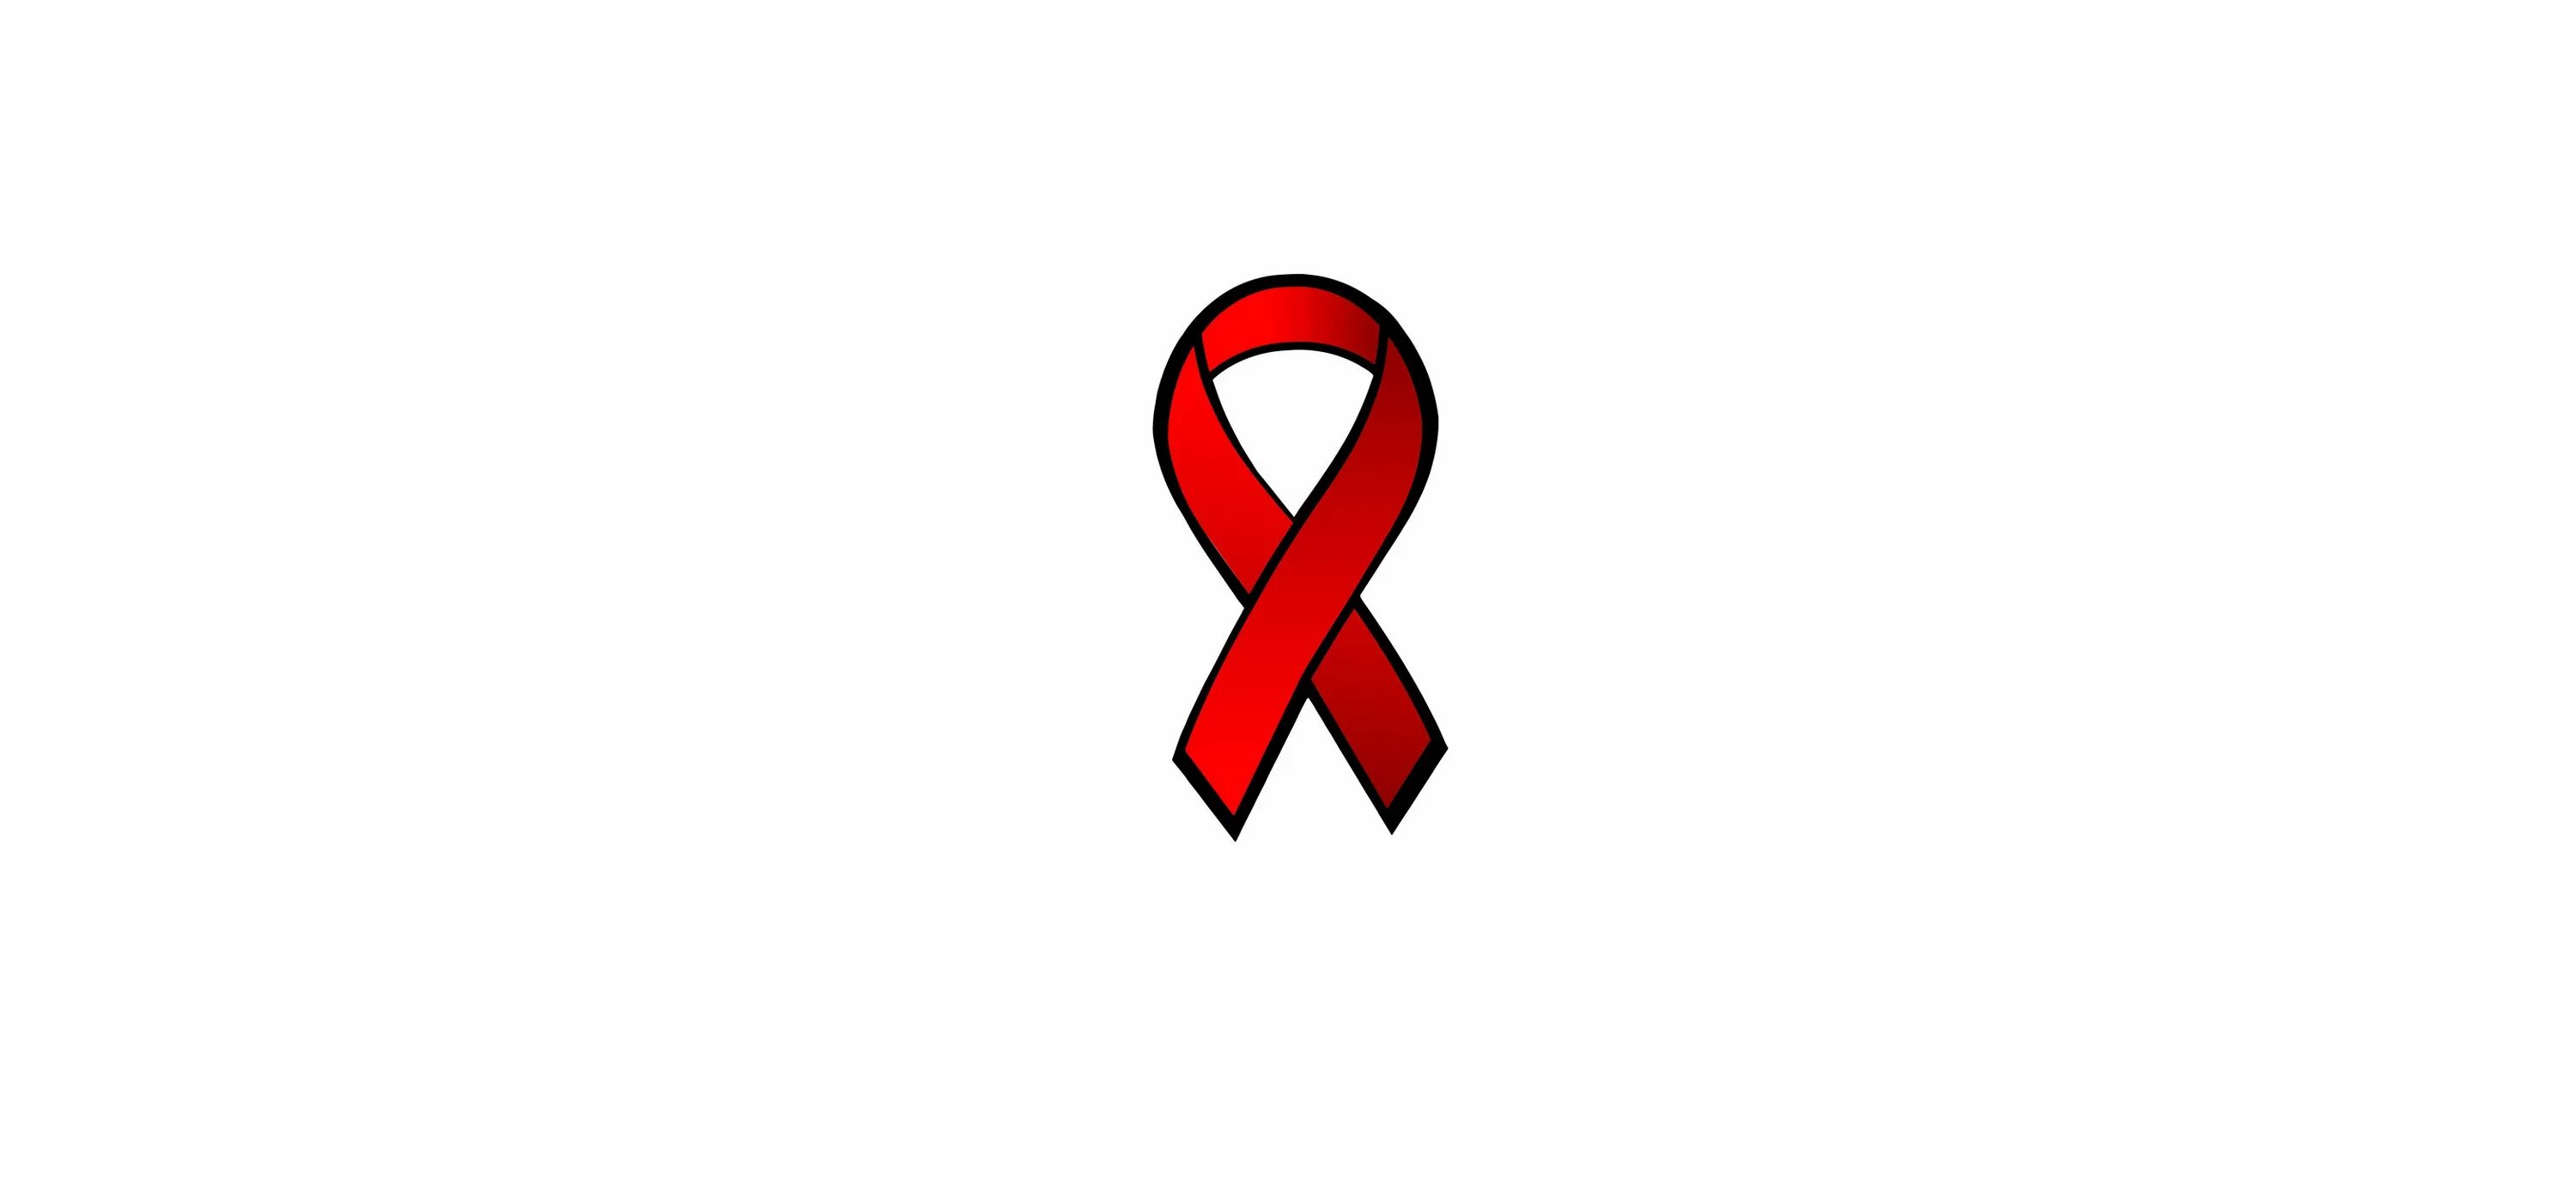 Ну спида. СПИД. Эмблема СПИД центра. Центр по профилактике СПИД логотип. Фонд борьбы со СПИДОМ.